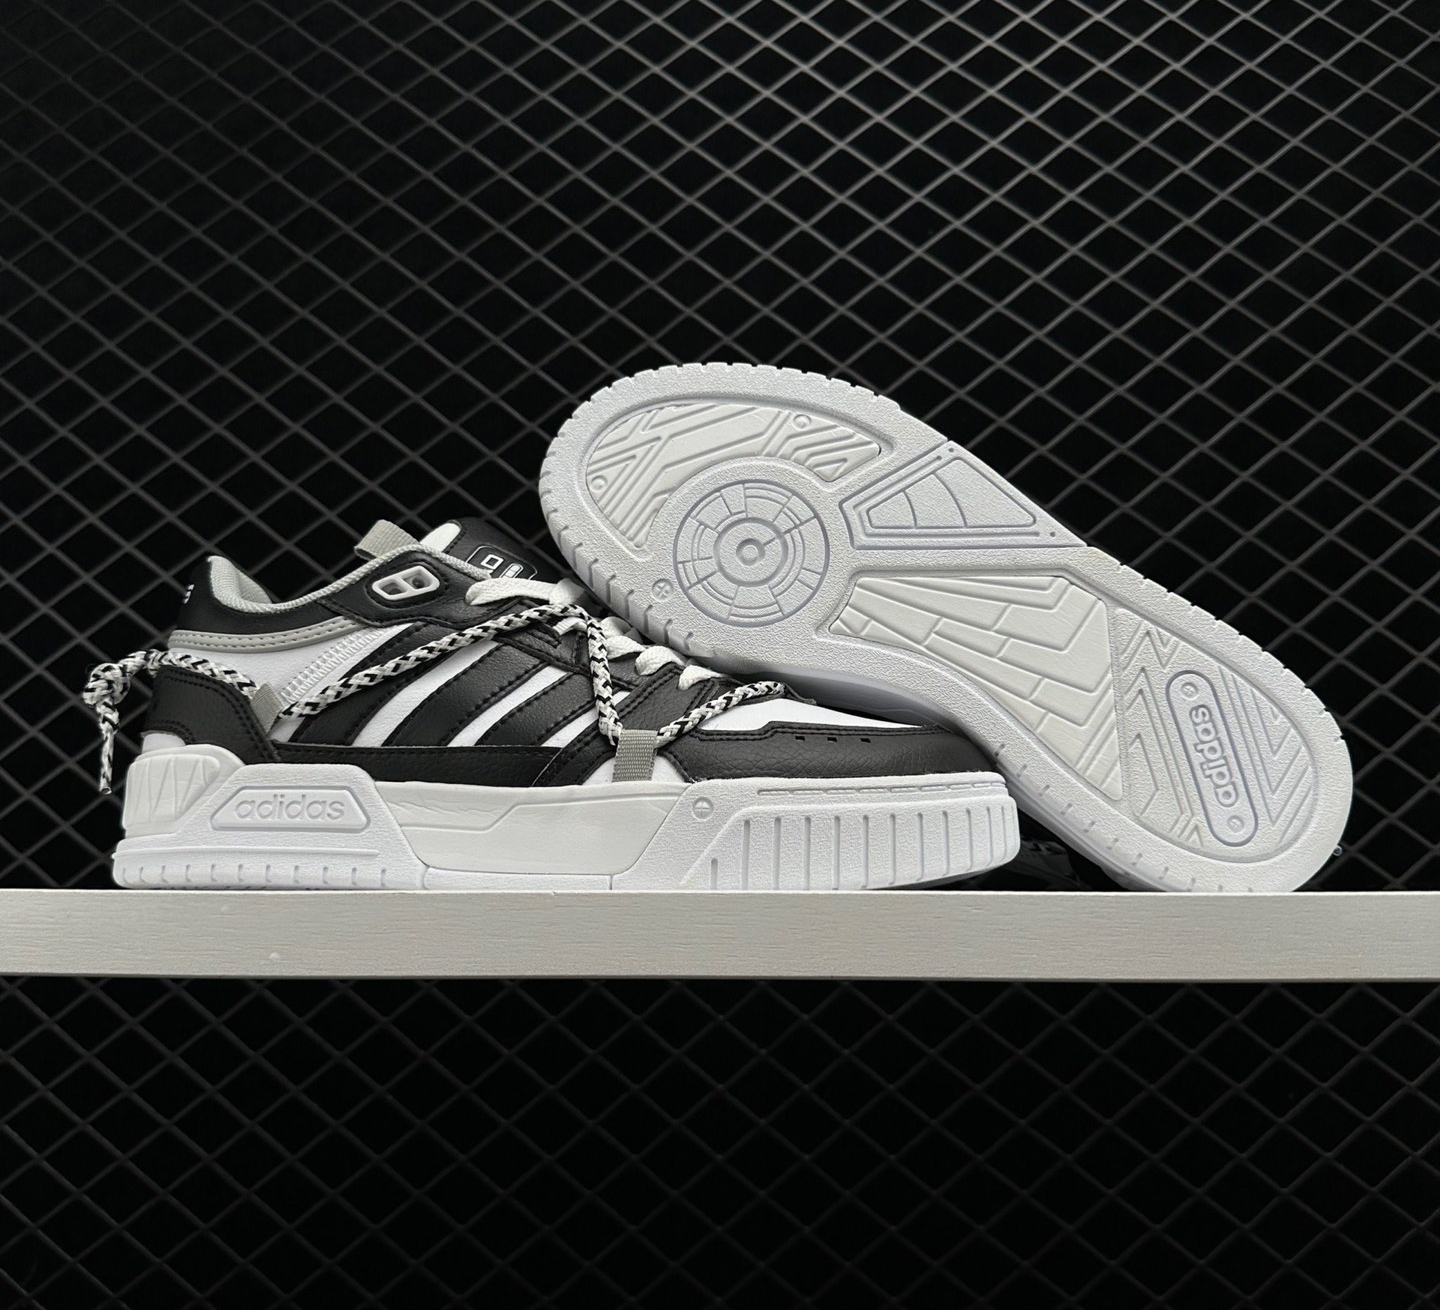 Adidas Neo D-Pad 'Black White' IG7586 - Stylish and Versatile Footwear